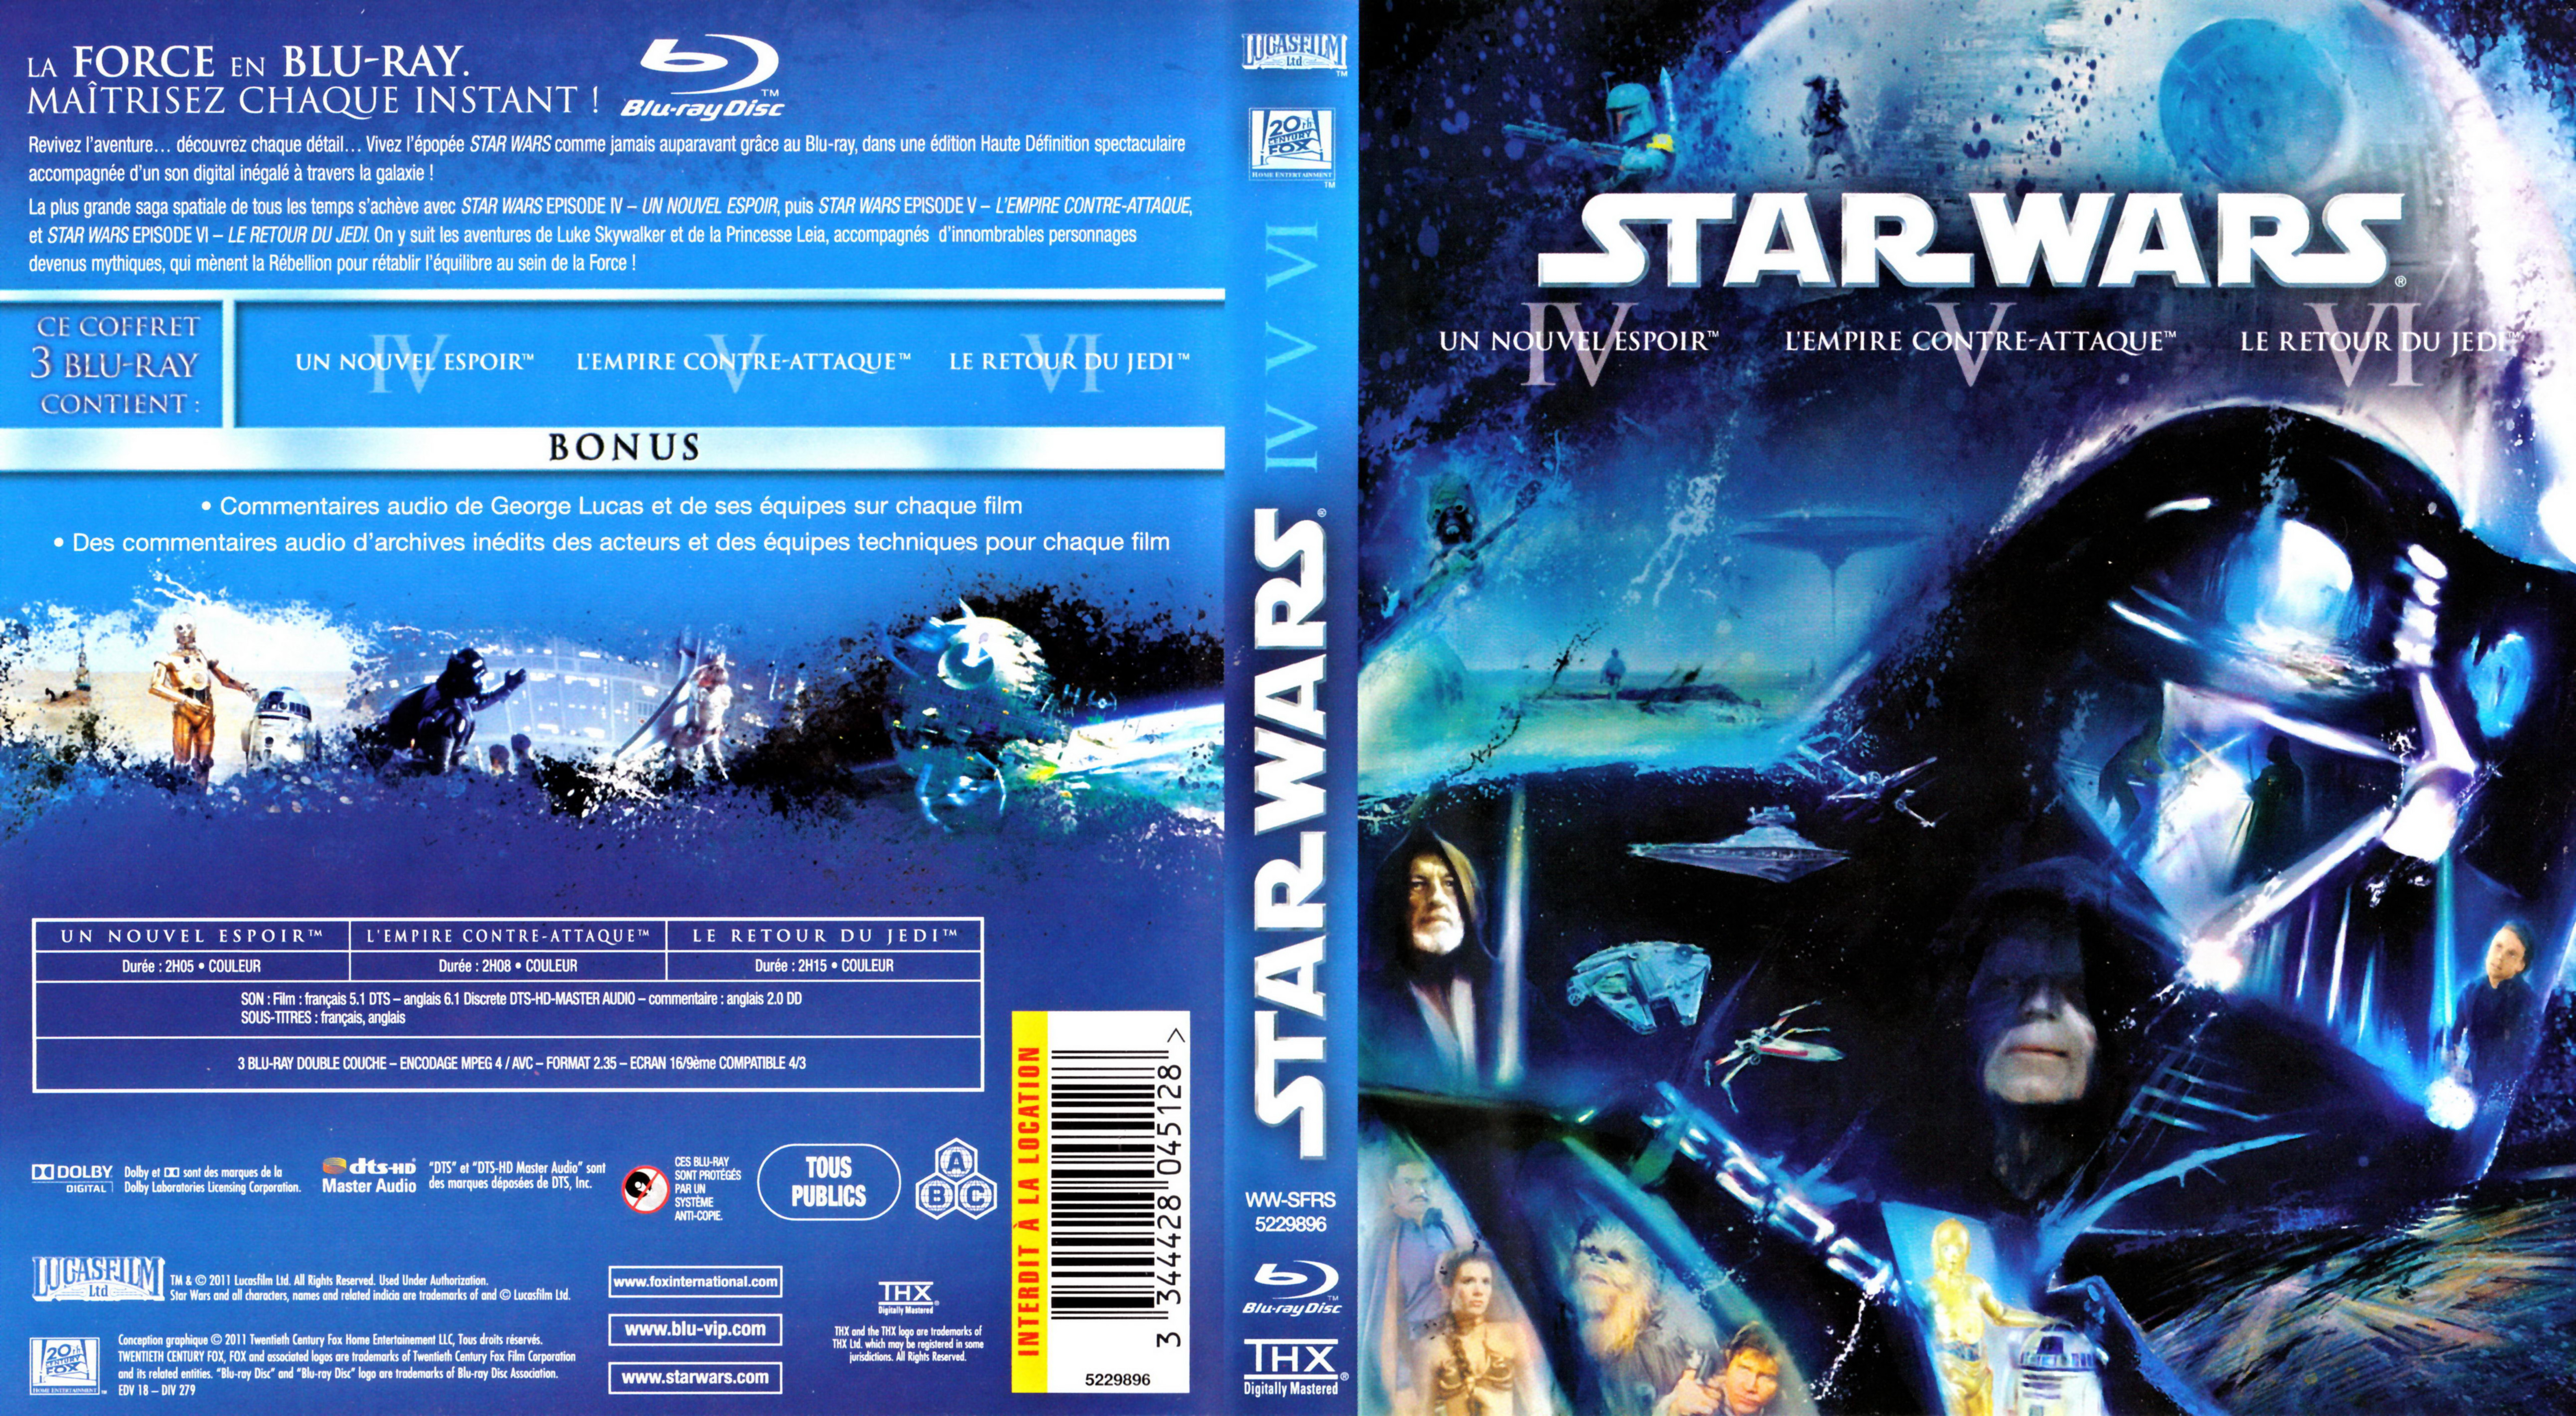 Jaquette DVD Star wars Episode 4 5 6 (BLU-RAY)